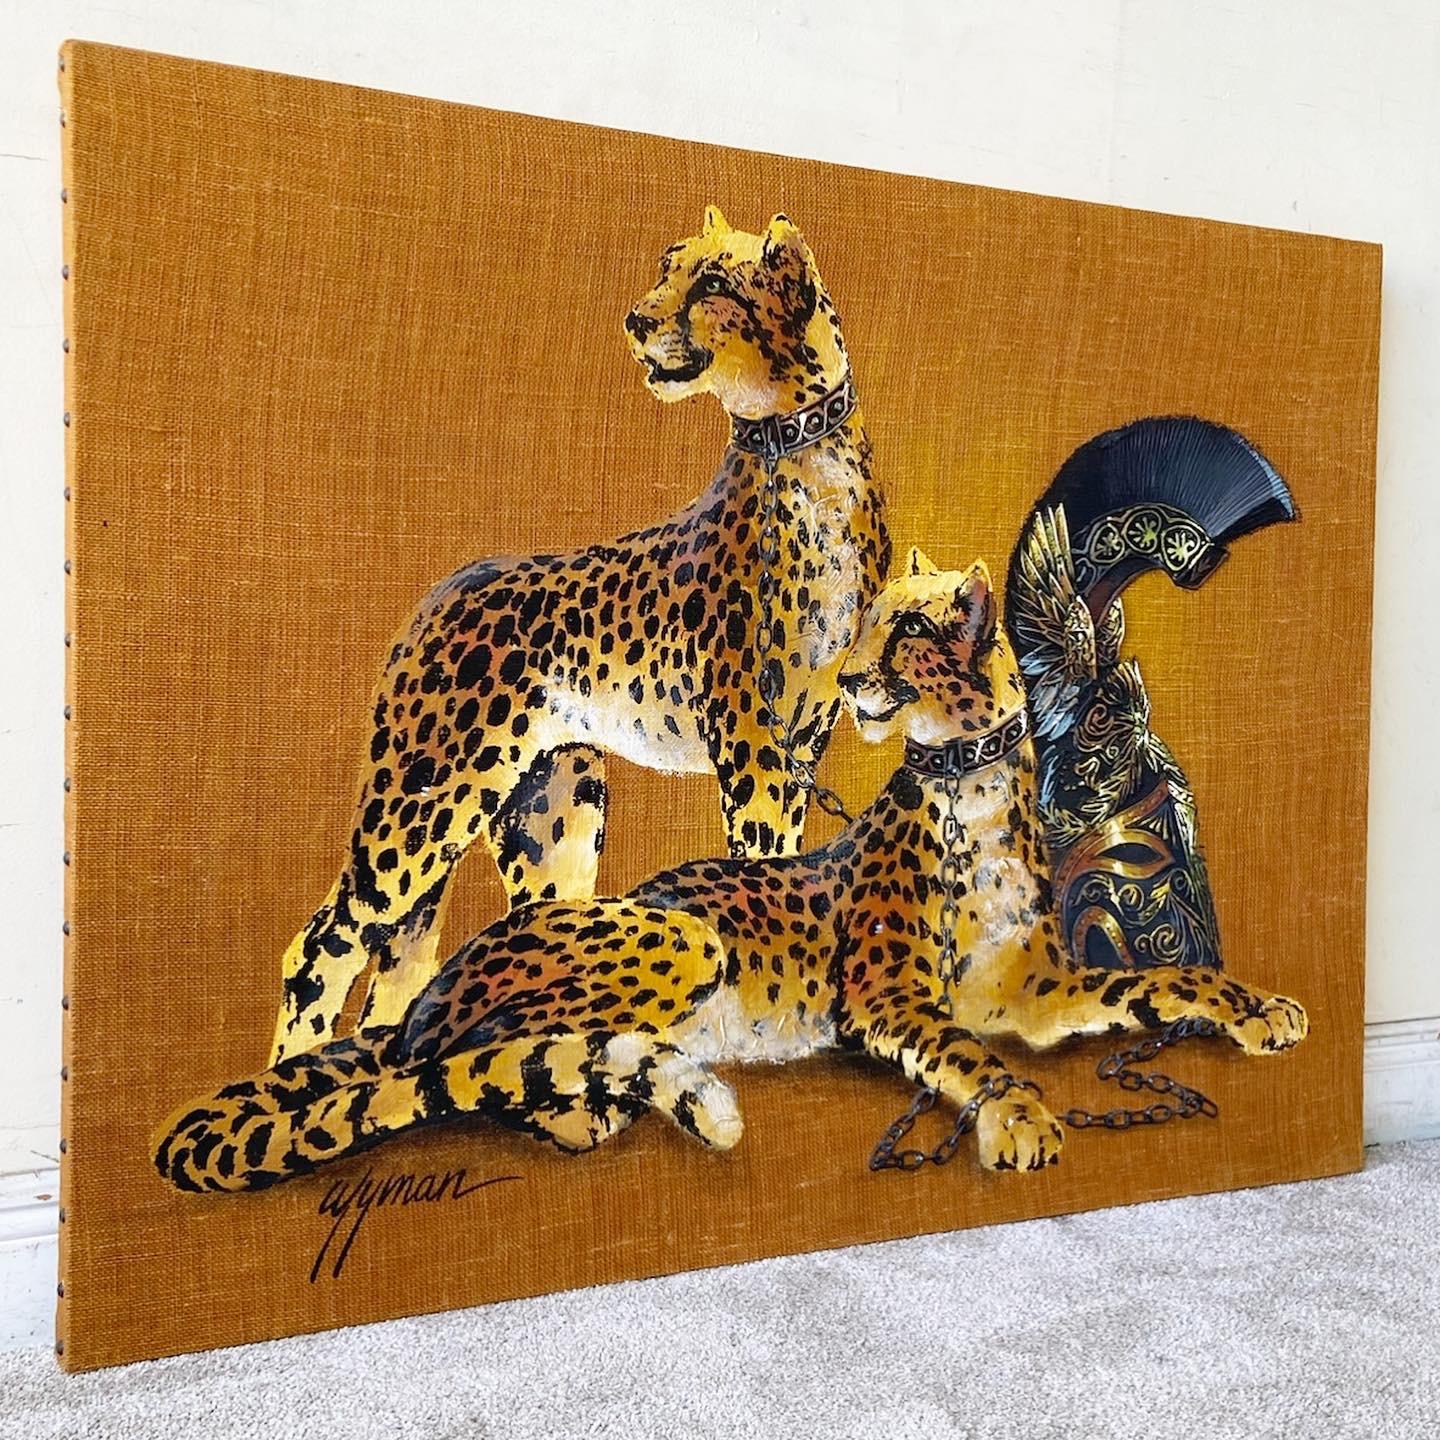 Mid-Century Modern Large Painting of Cheetahs on Burlap Signed Wyman 3